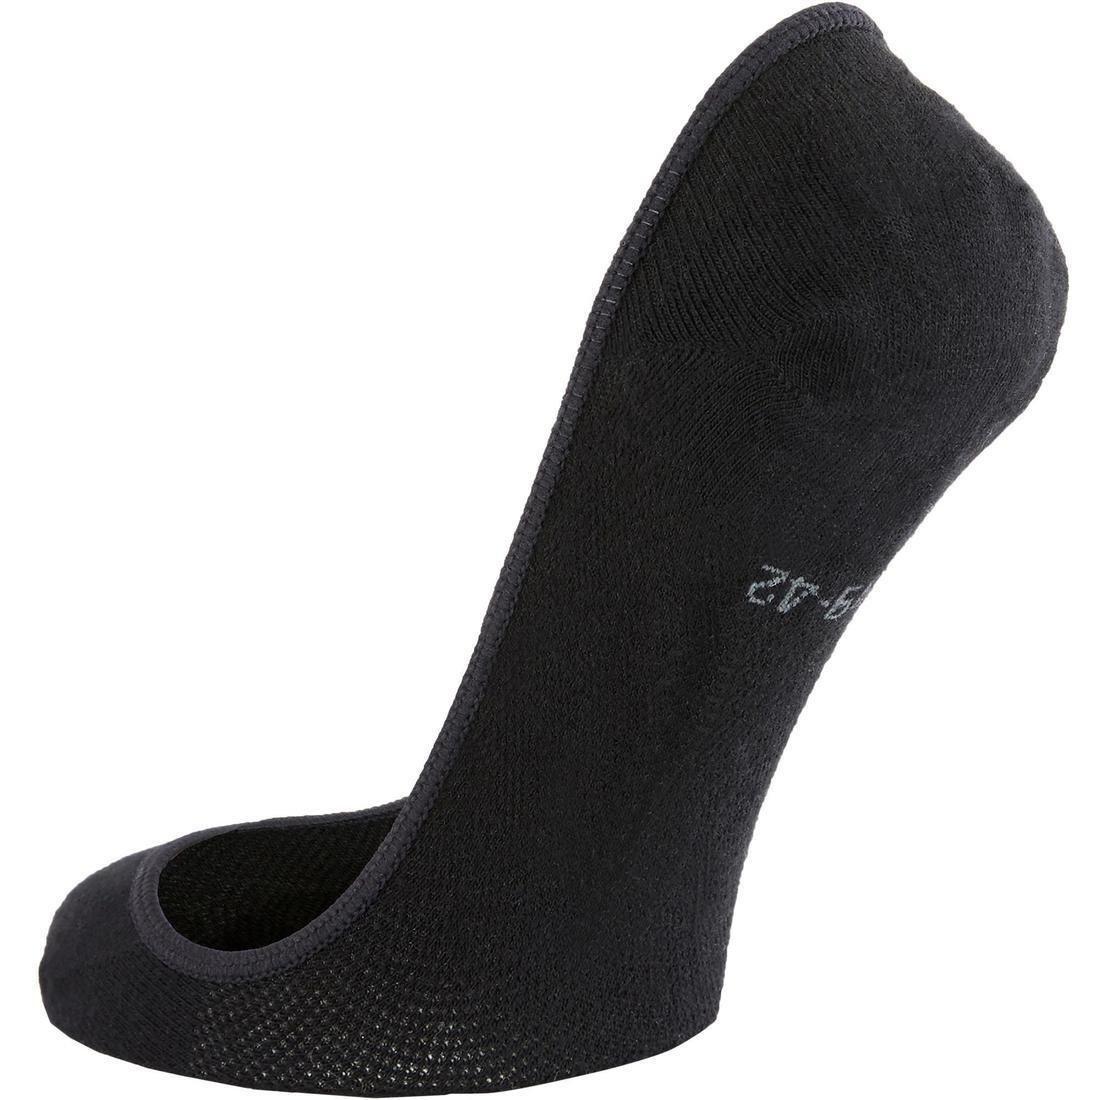 NEWFEEL - Fitness Walking Socks Ws 140 Ballerina 2-Pack, Black